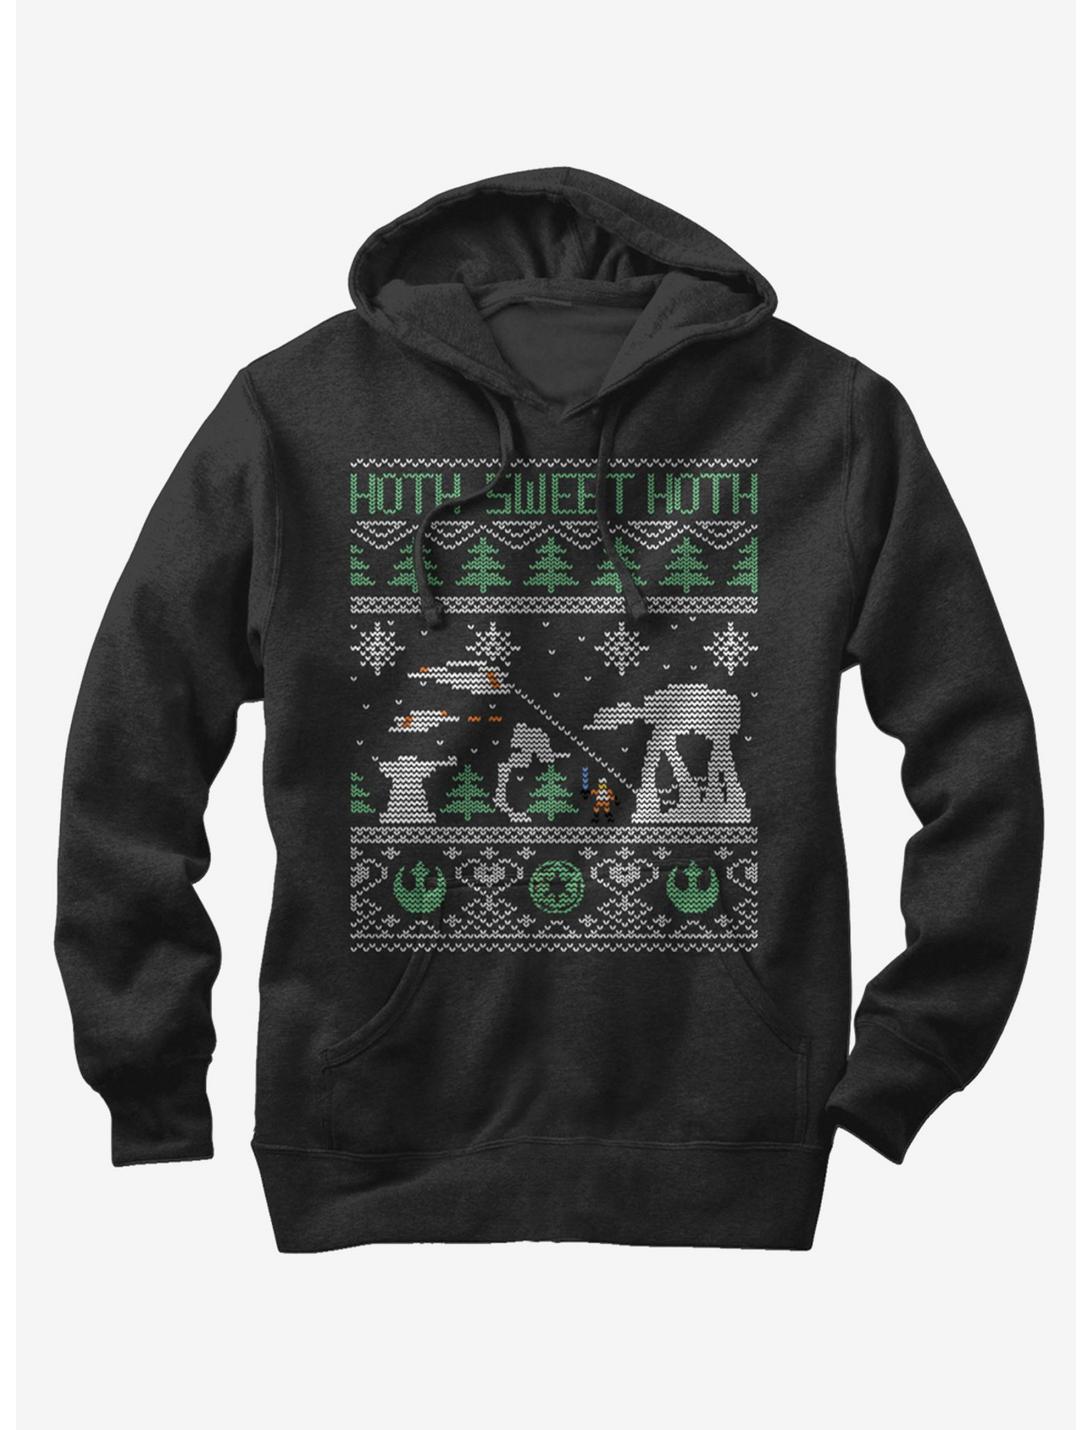 Star Wars Hoth Sweet Hoth Ugly Christmas Sweater Hoodie, BLACK, hi-res